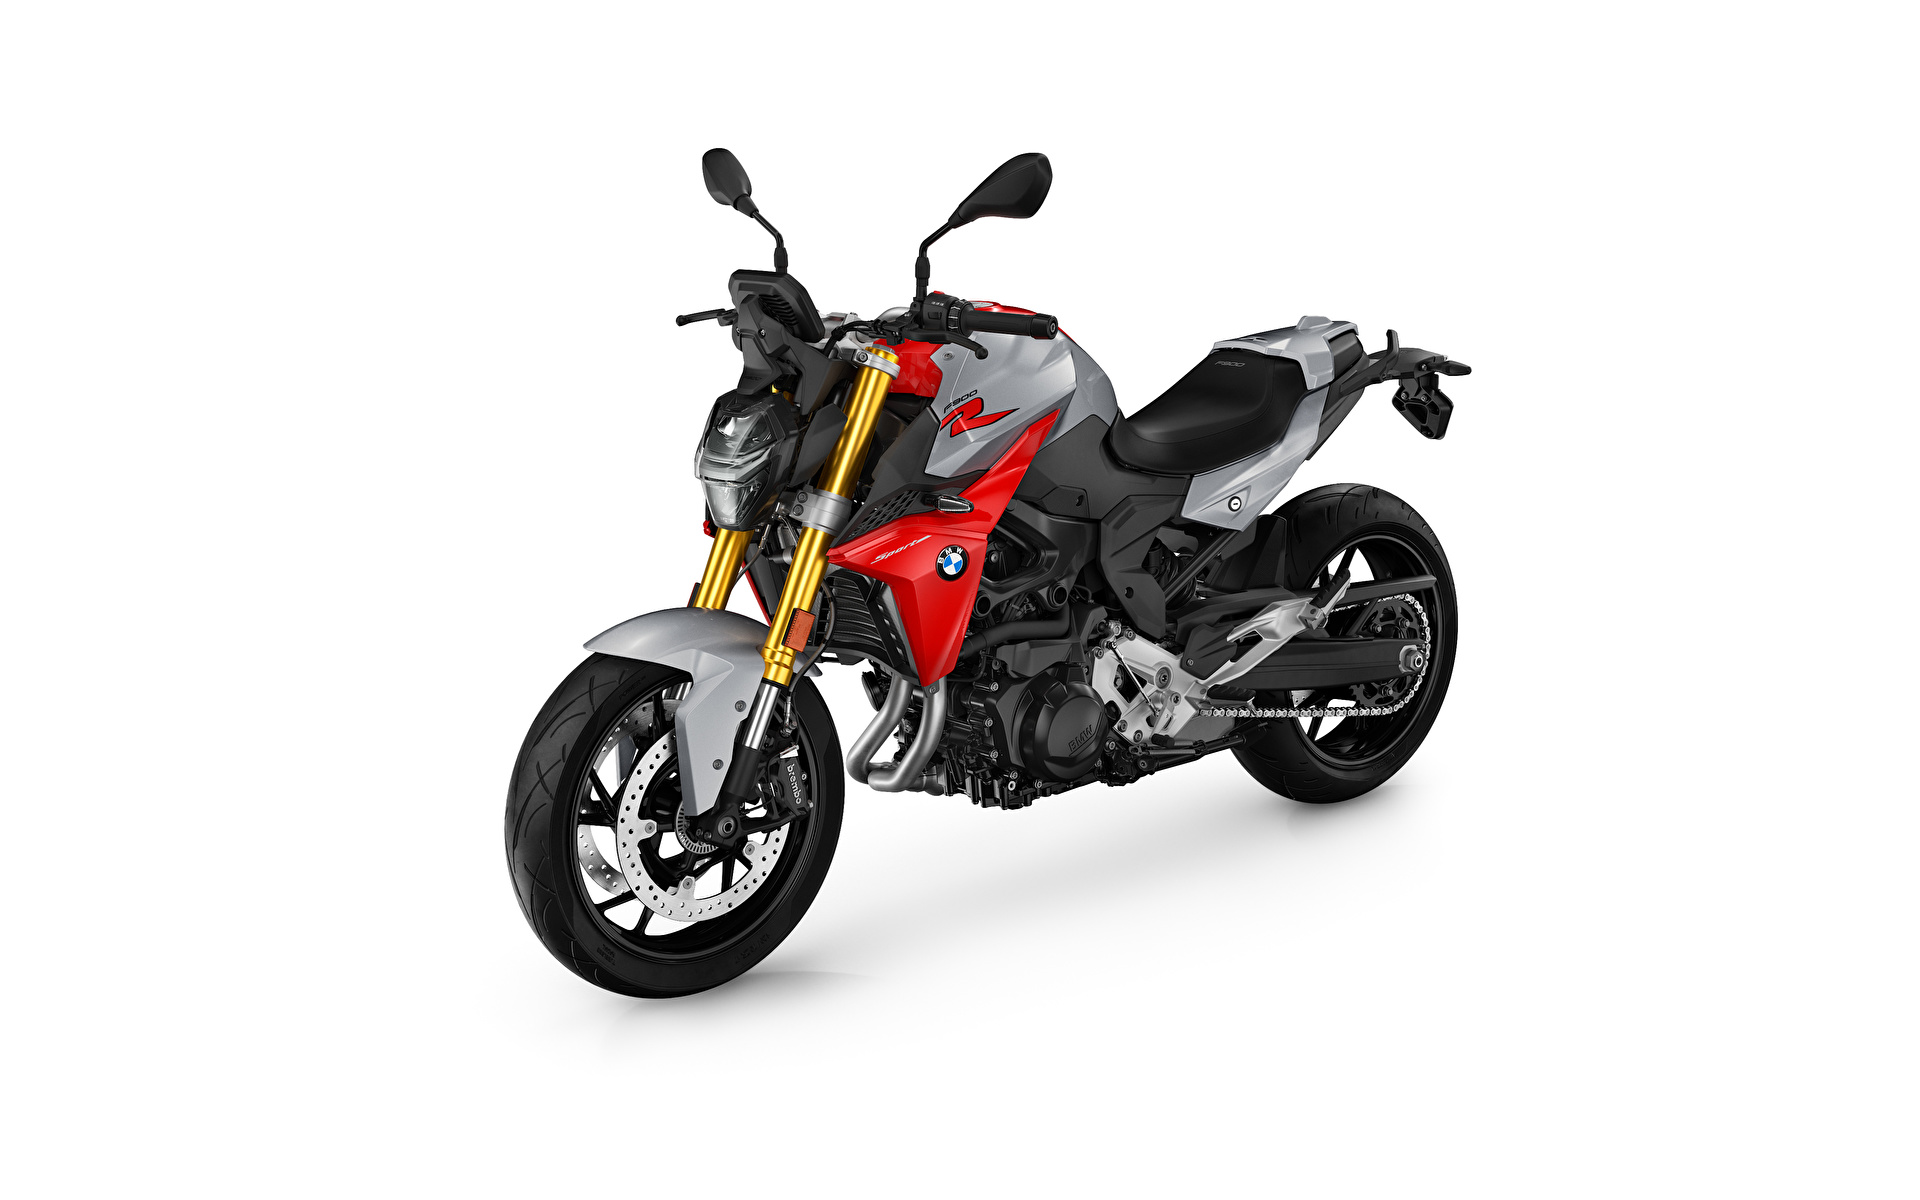 Foto BMW - Moto F 900 R, 2020 motocicletta Sfondo bianco 1920x1200 Moto motocicli